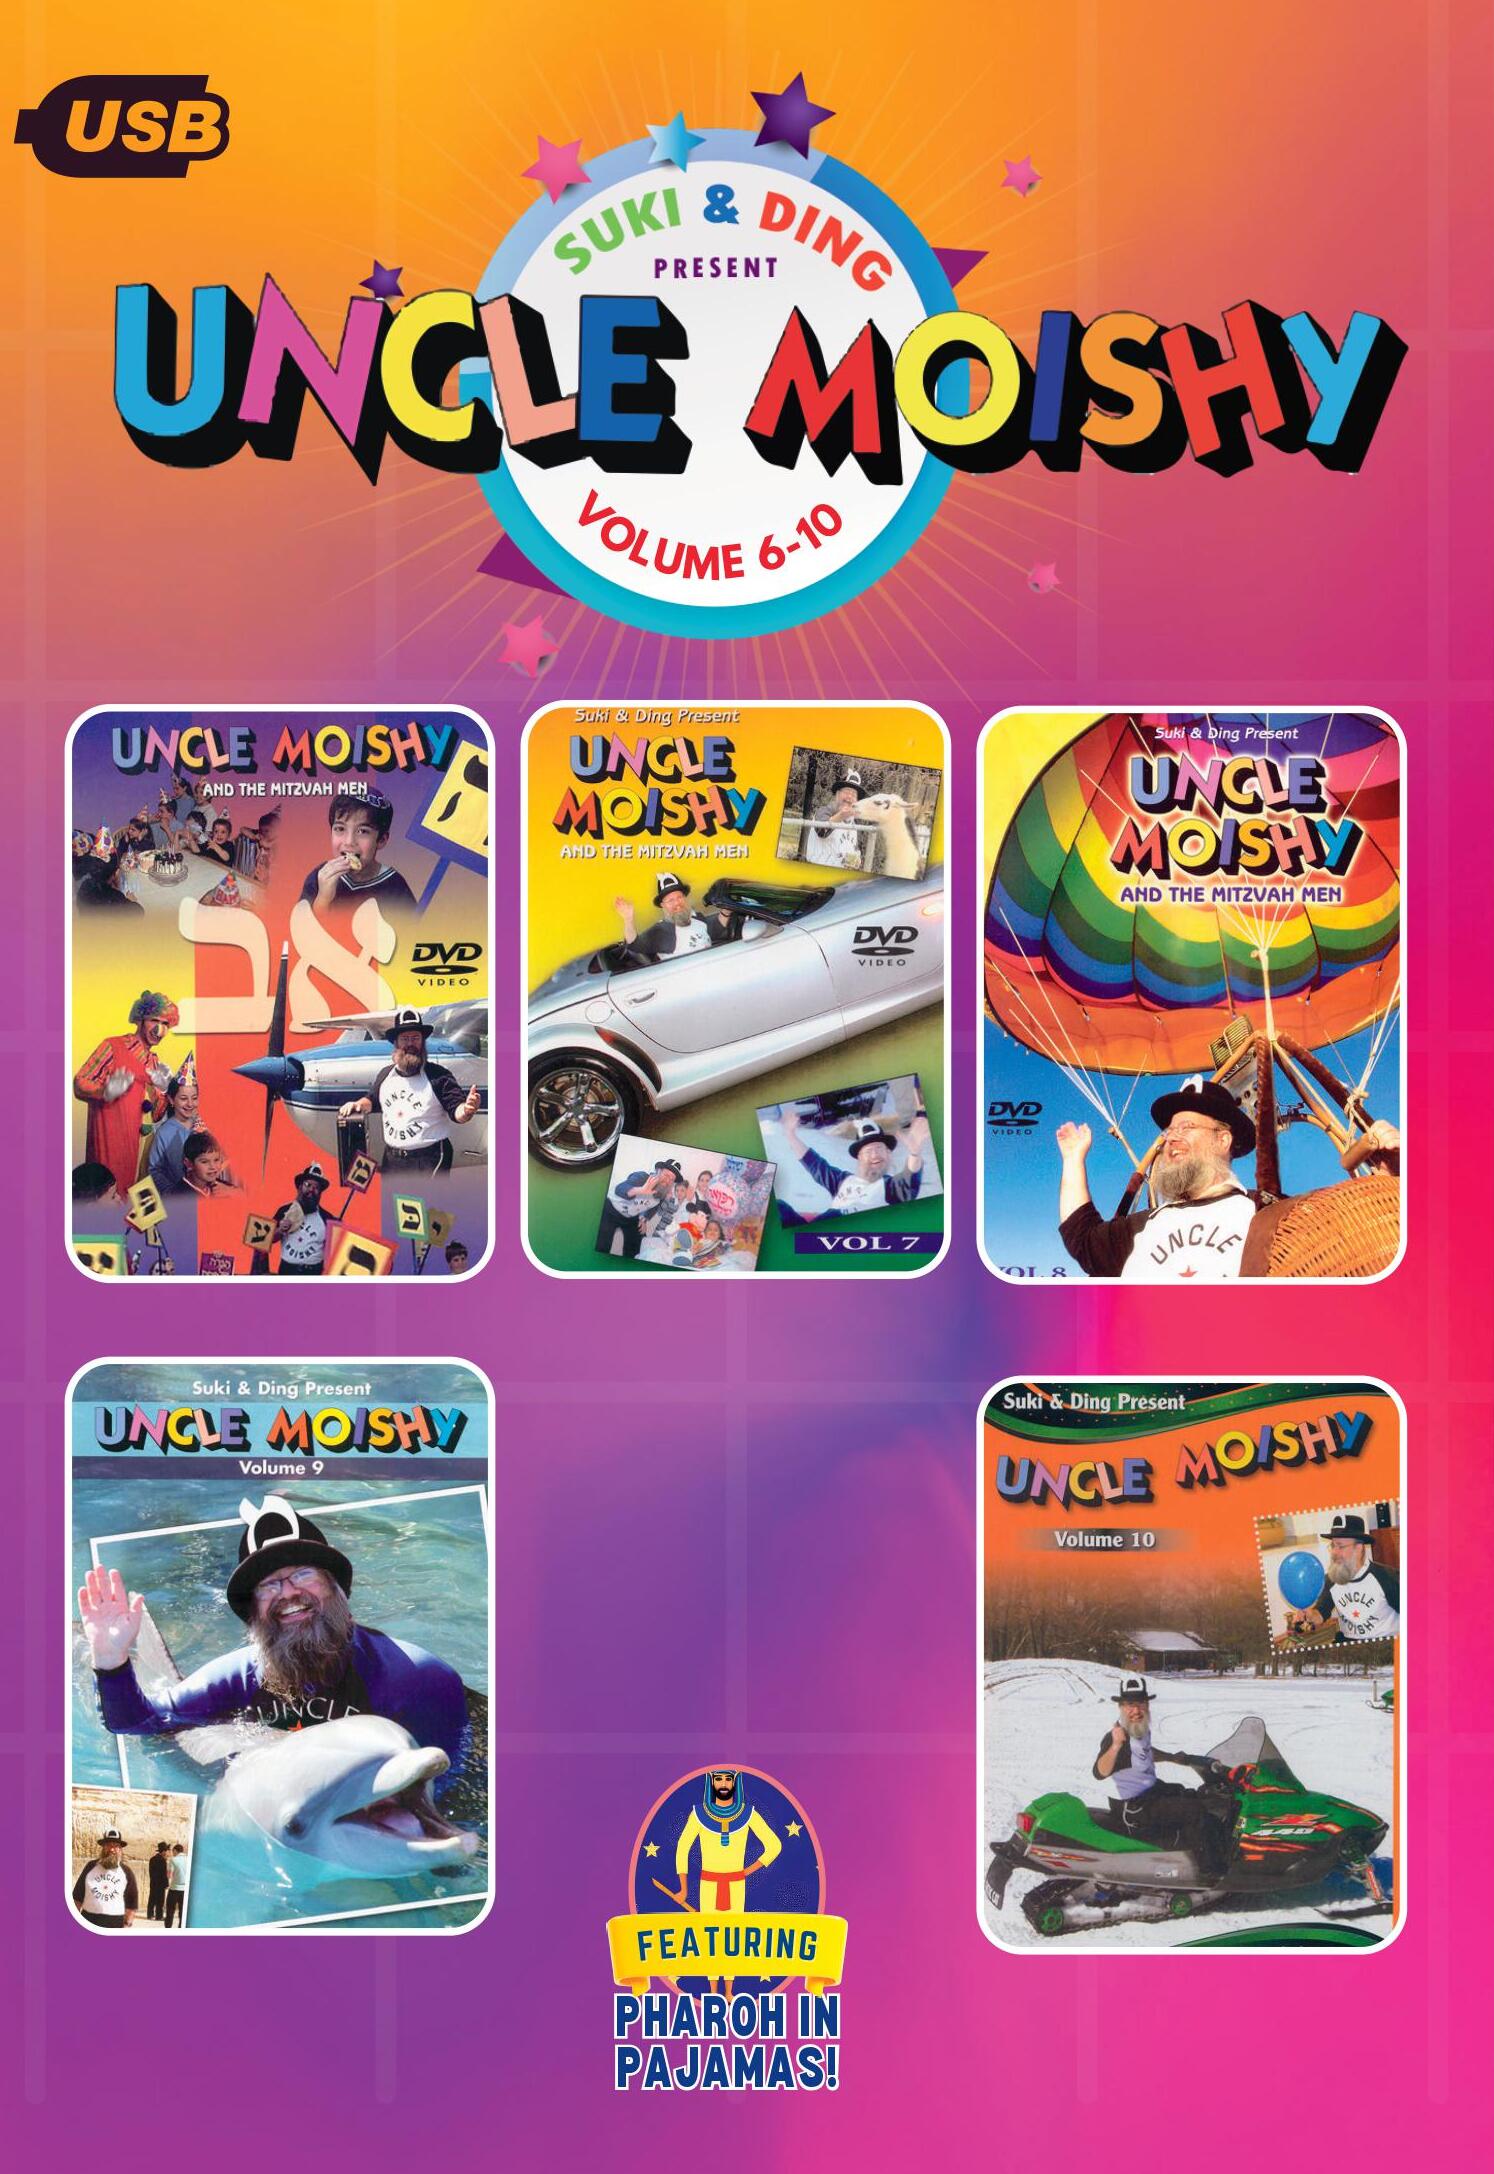 Uncle Moishy - Vol. 6-10 USB (Video)